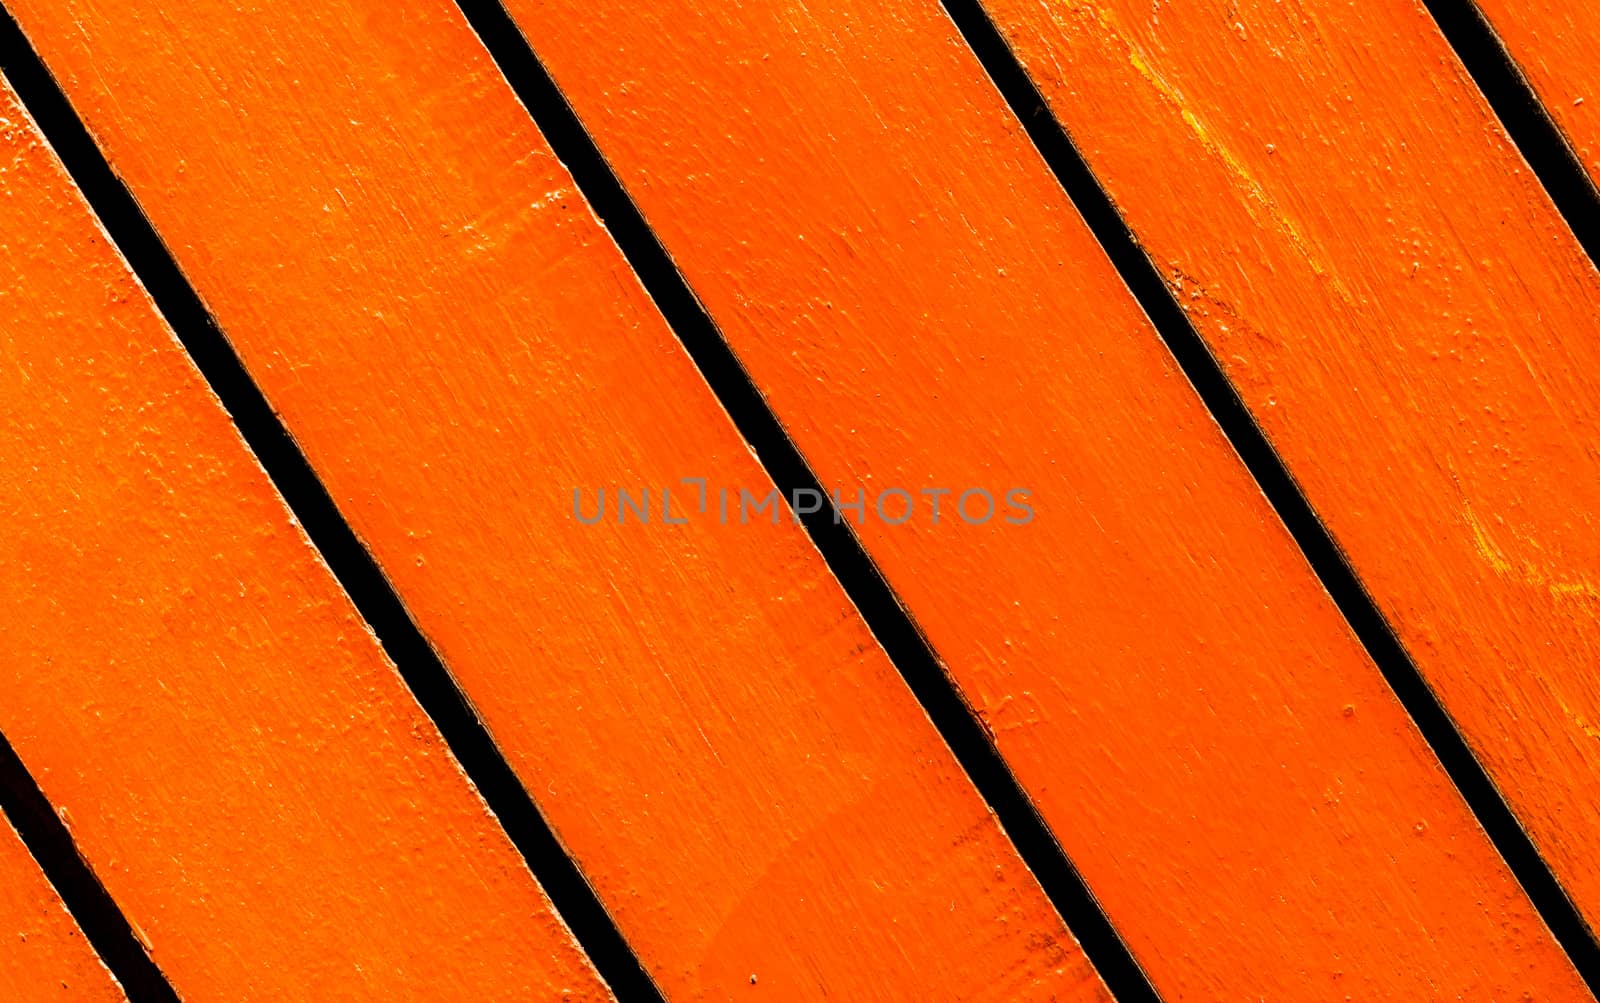 Beautiful orange wood wall surfaces.